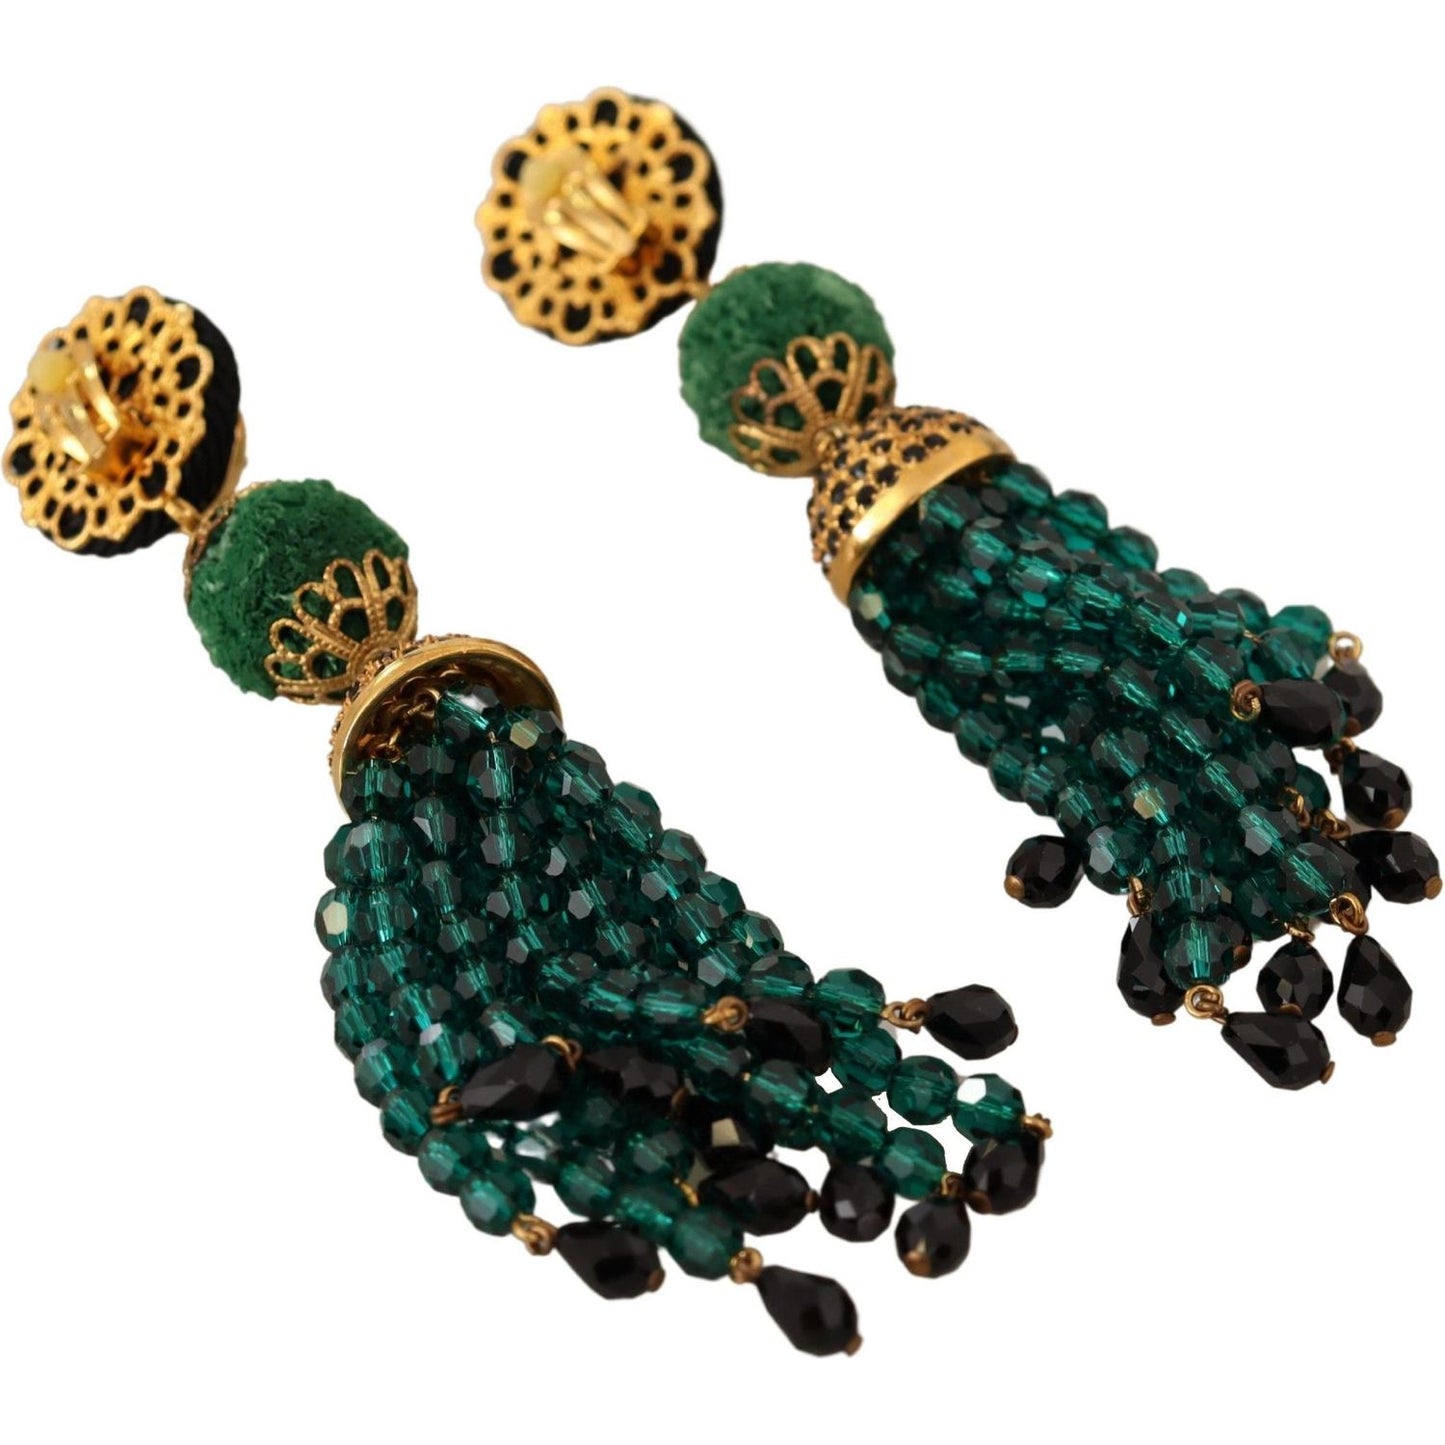 Dolce & Gabbana Elegant Crystal Drop Clip-On Earrings green-crystals-gold-tone-drop-clip-on-dangle-earrings IMG_7624-1-2a9f4327-938.jpg